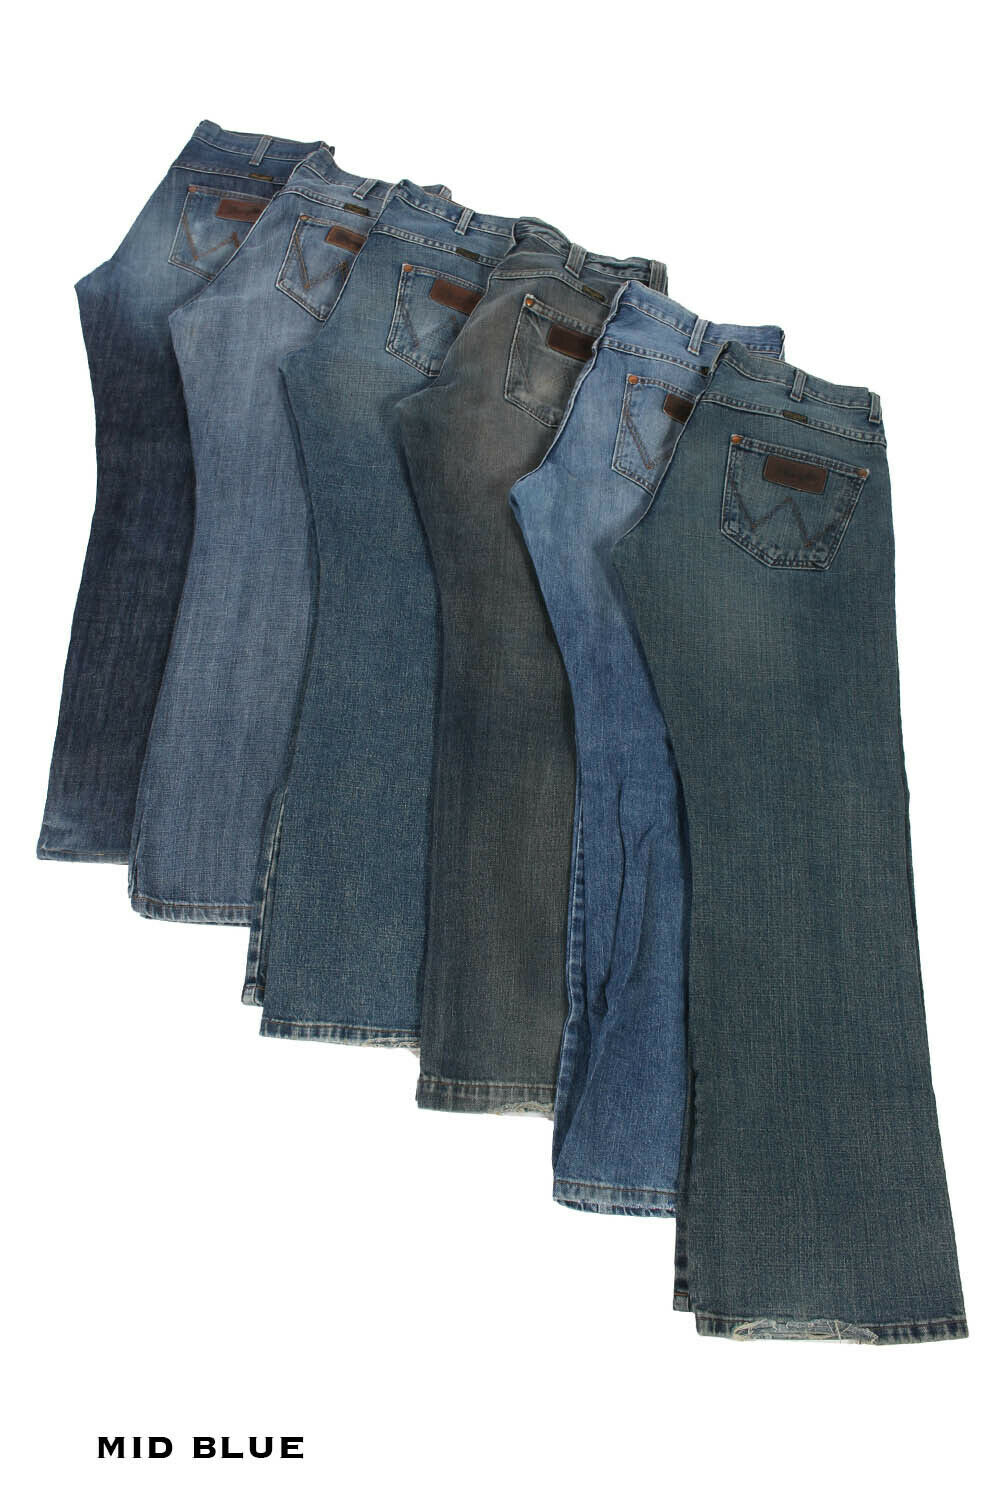 Bootcut Dayton Regular fit Retro Vintage Mens Wrangler Jeans Arizona Roxboro 